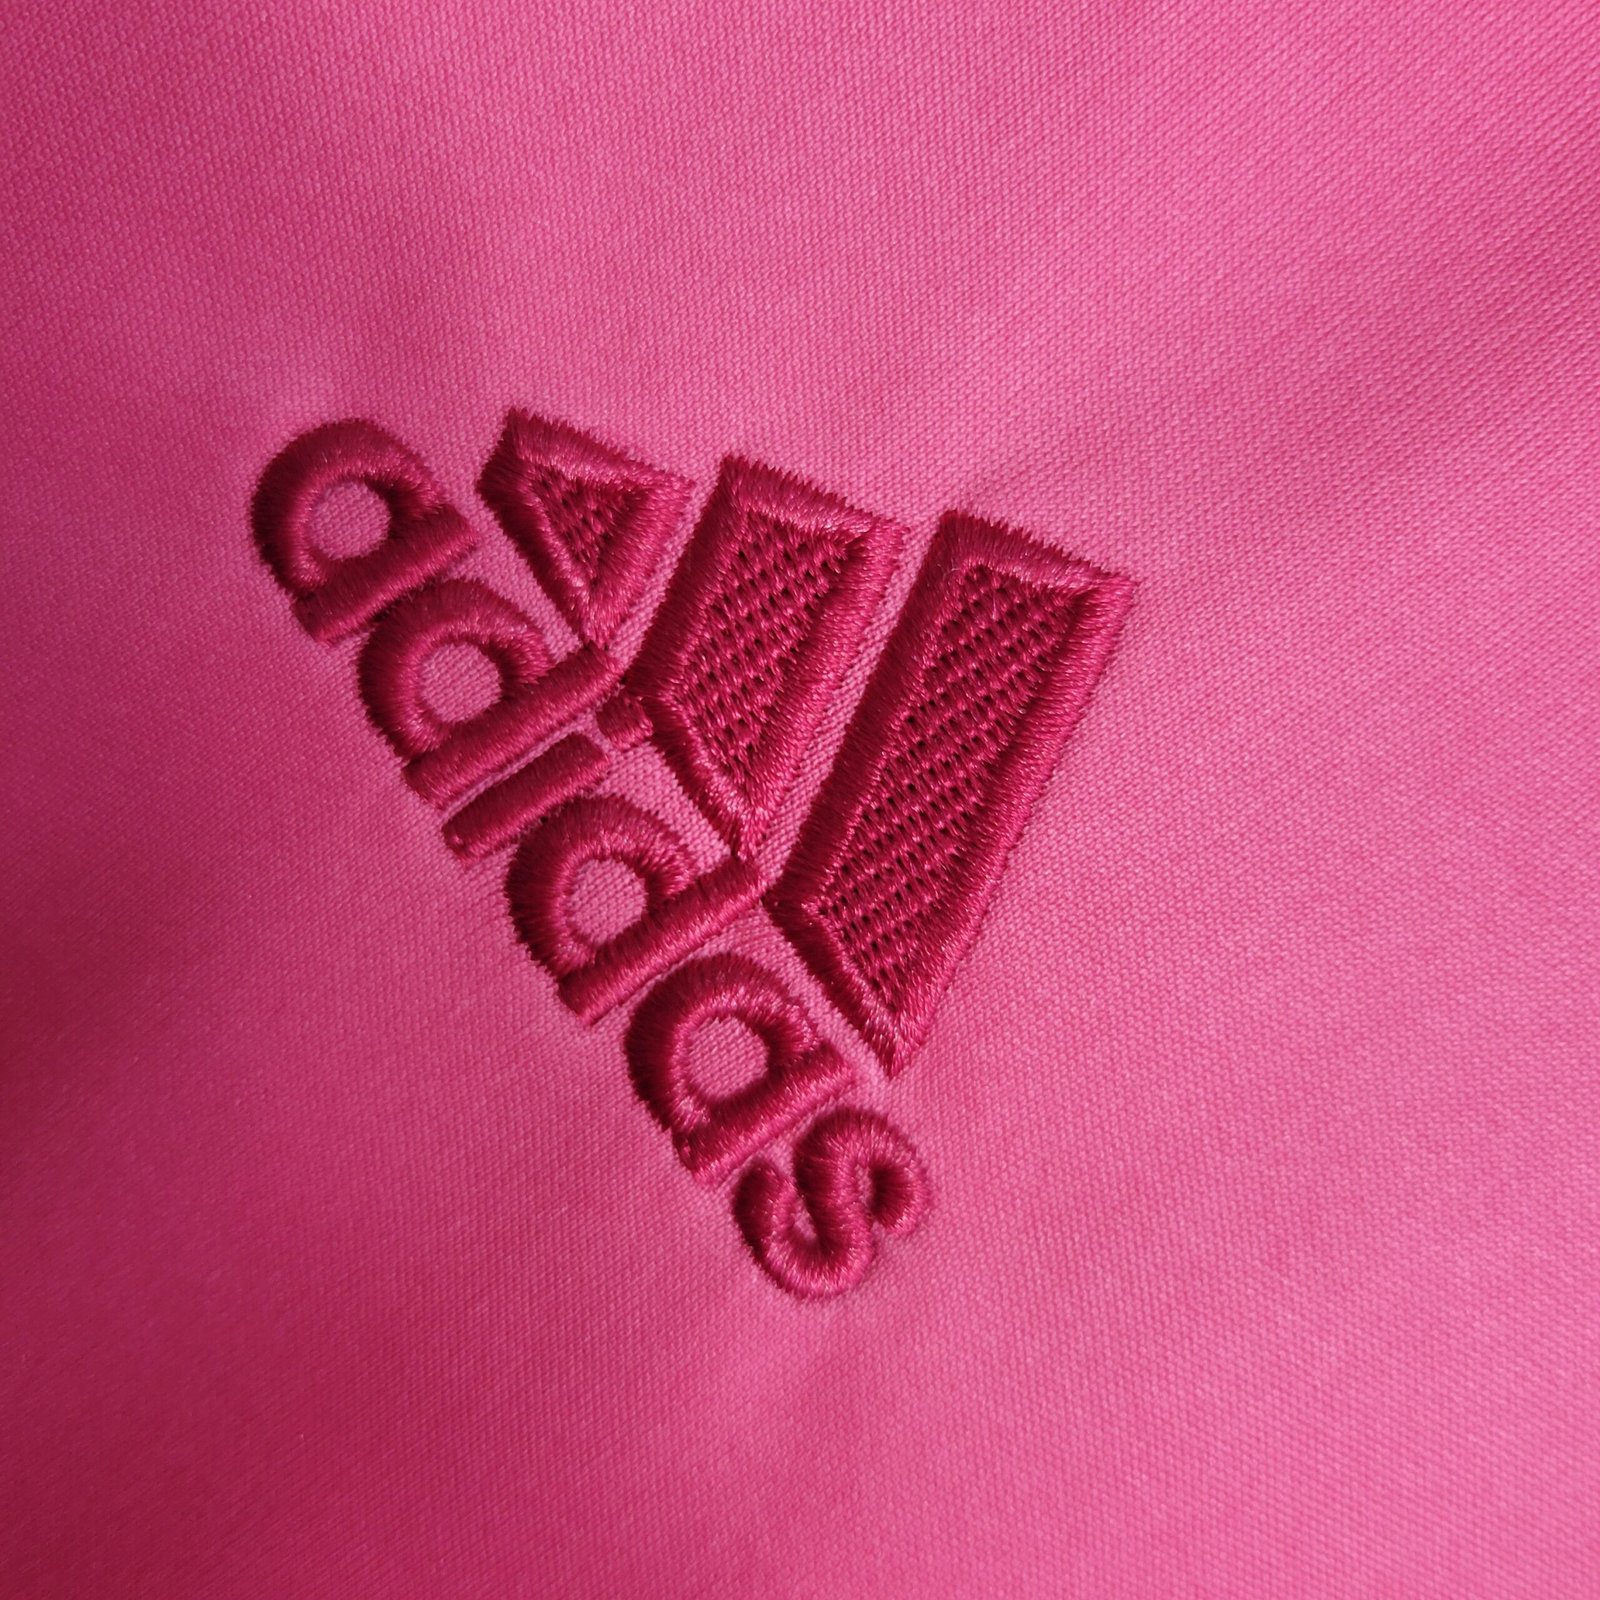 Kit Camisa Adidas Internacional Outubro Rosa 2022 Feminina + Camisa  Internacional Feminina Vermelha 